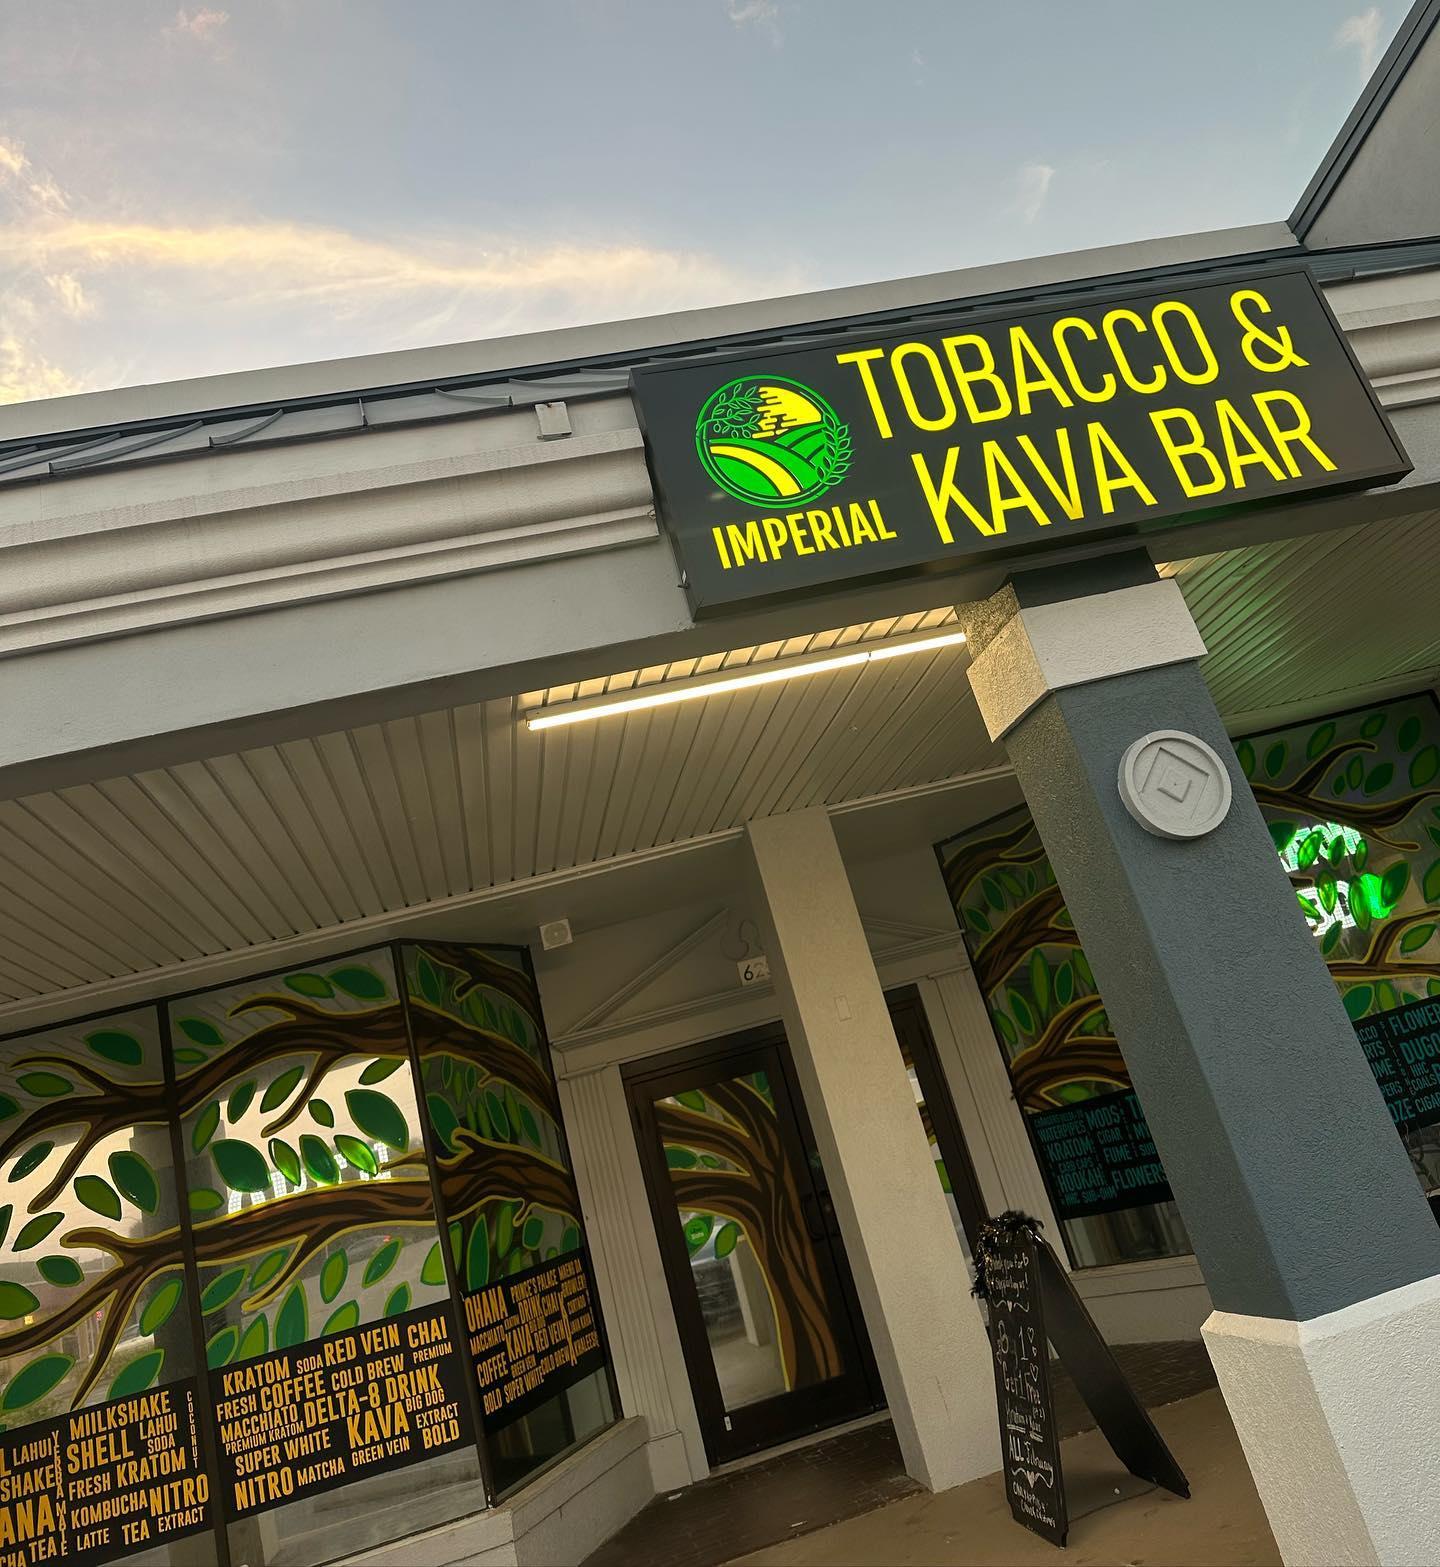 Pet Friendly Imperial Tobacco & Kava Bar